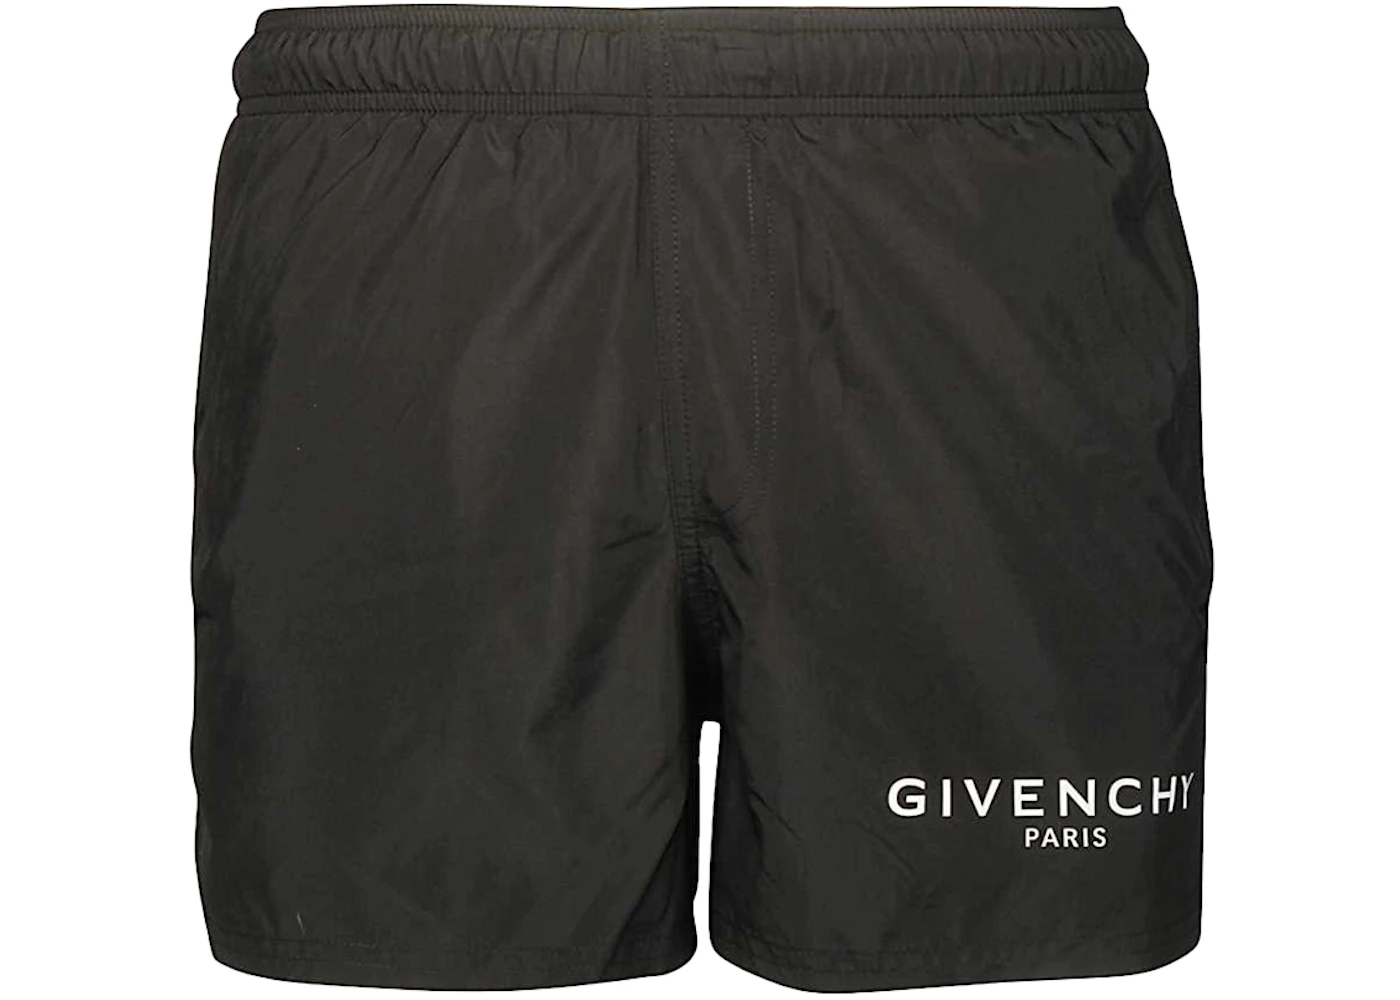 Givenchy Classic Logo Swim Short Black/White Men's - US